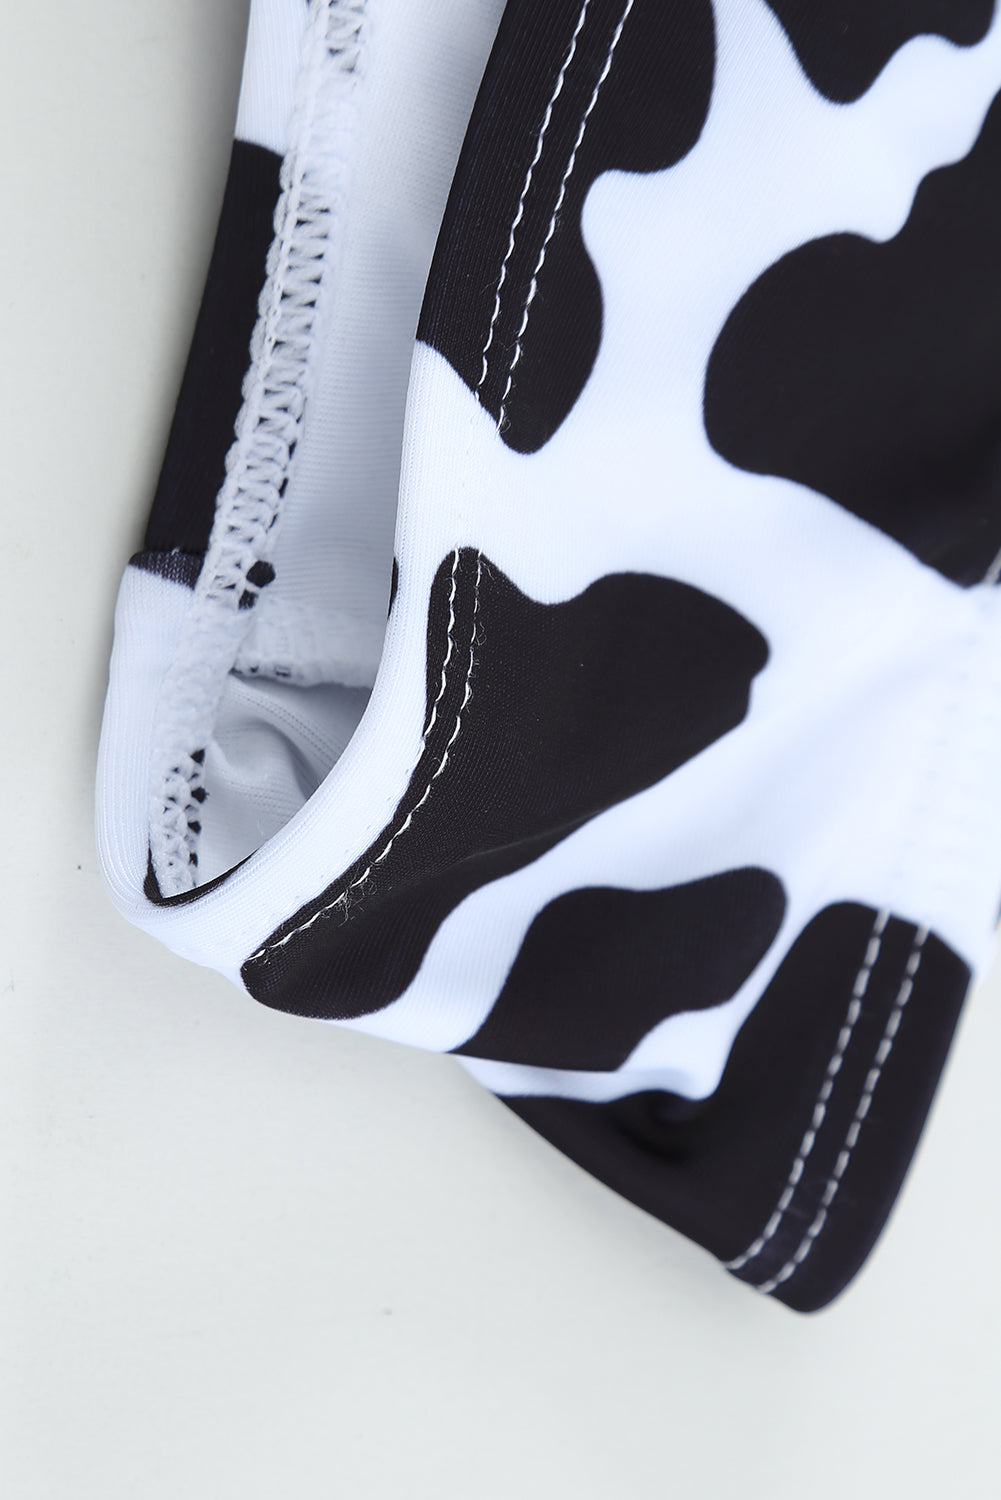 Cow Animal Print One-piece Swimsuit